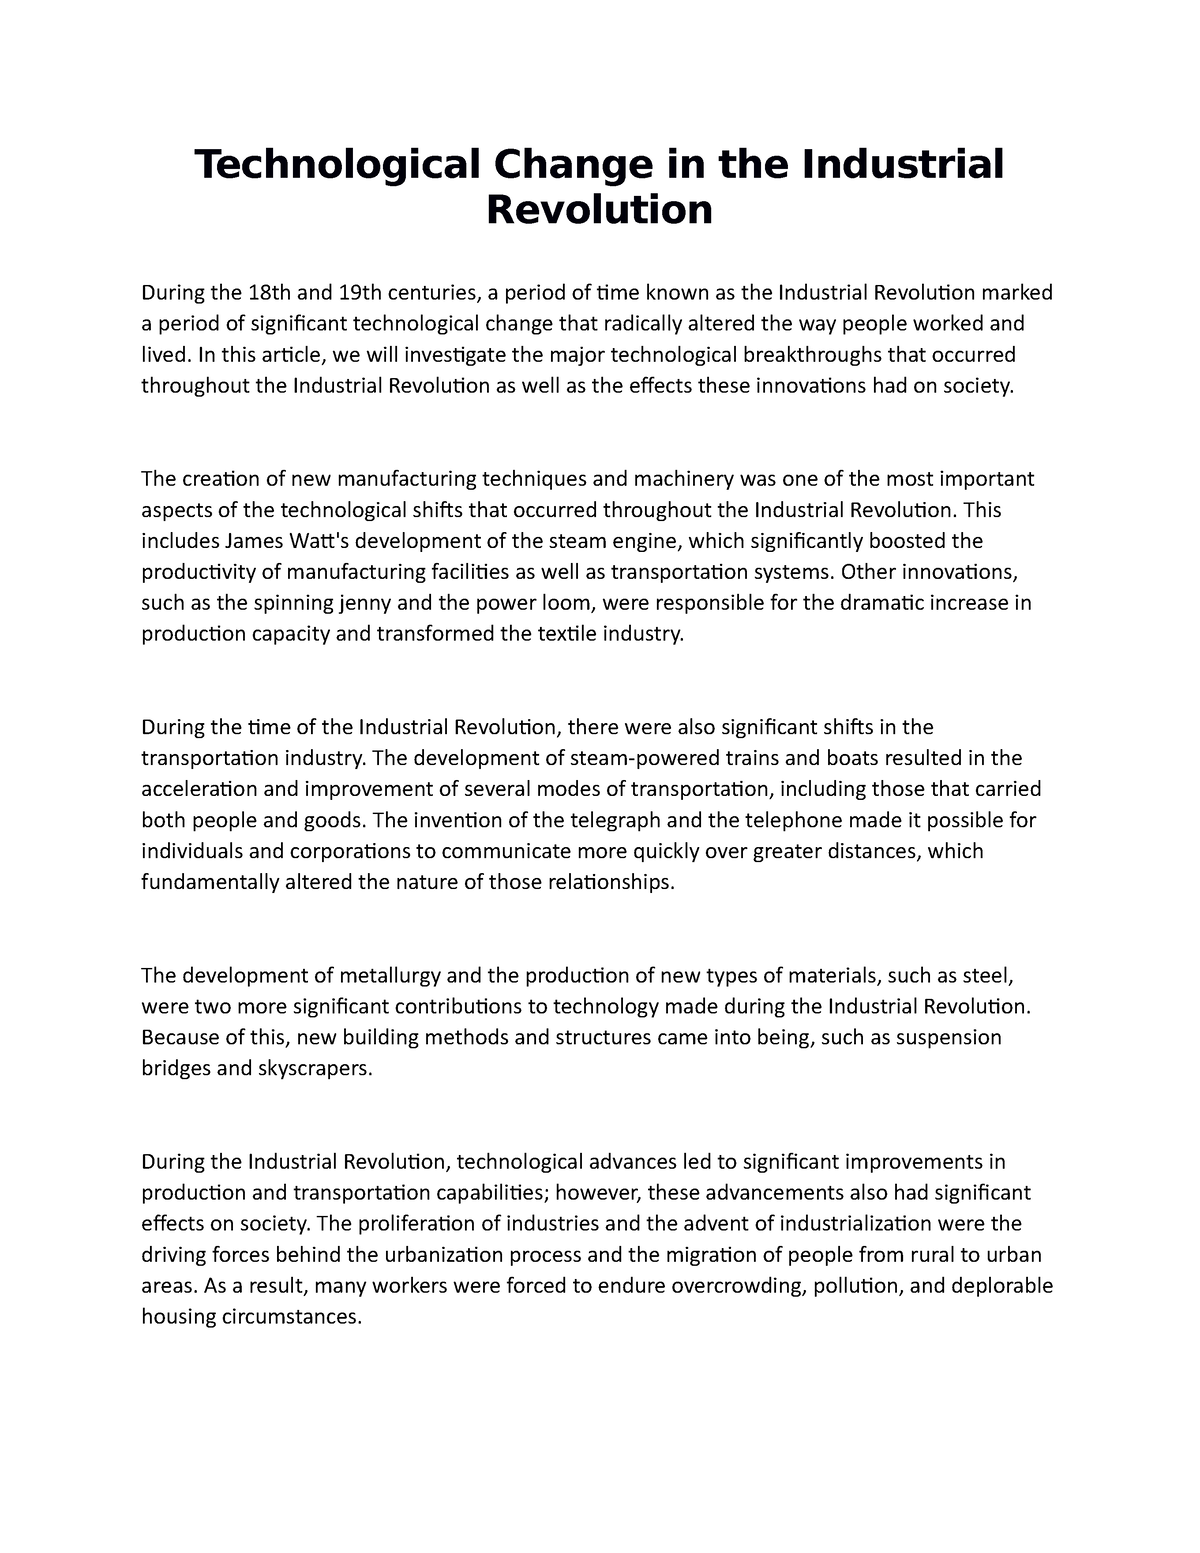 technological revolution essay pdf